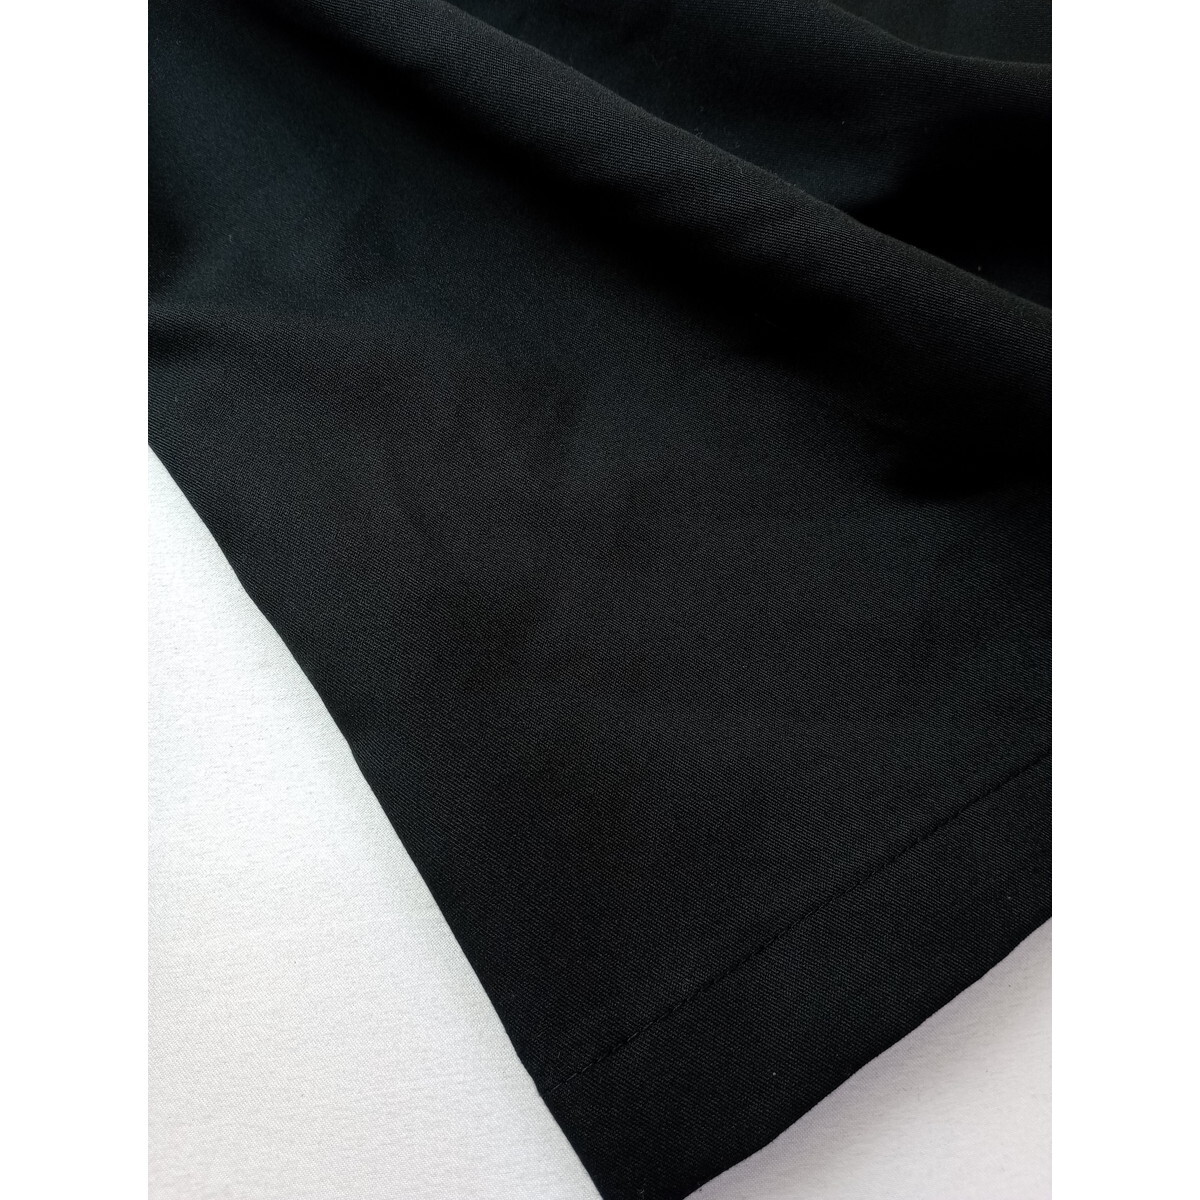 BONJOUR SAGANbon Jules SaGa n[ elegant relax mode style .] deep V neck all-in-one black black (56Y+7502)